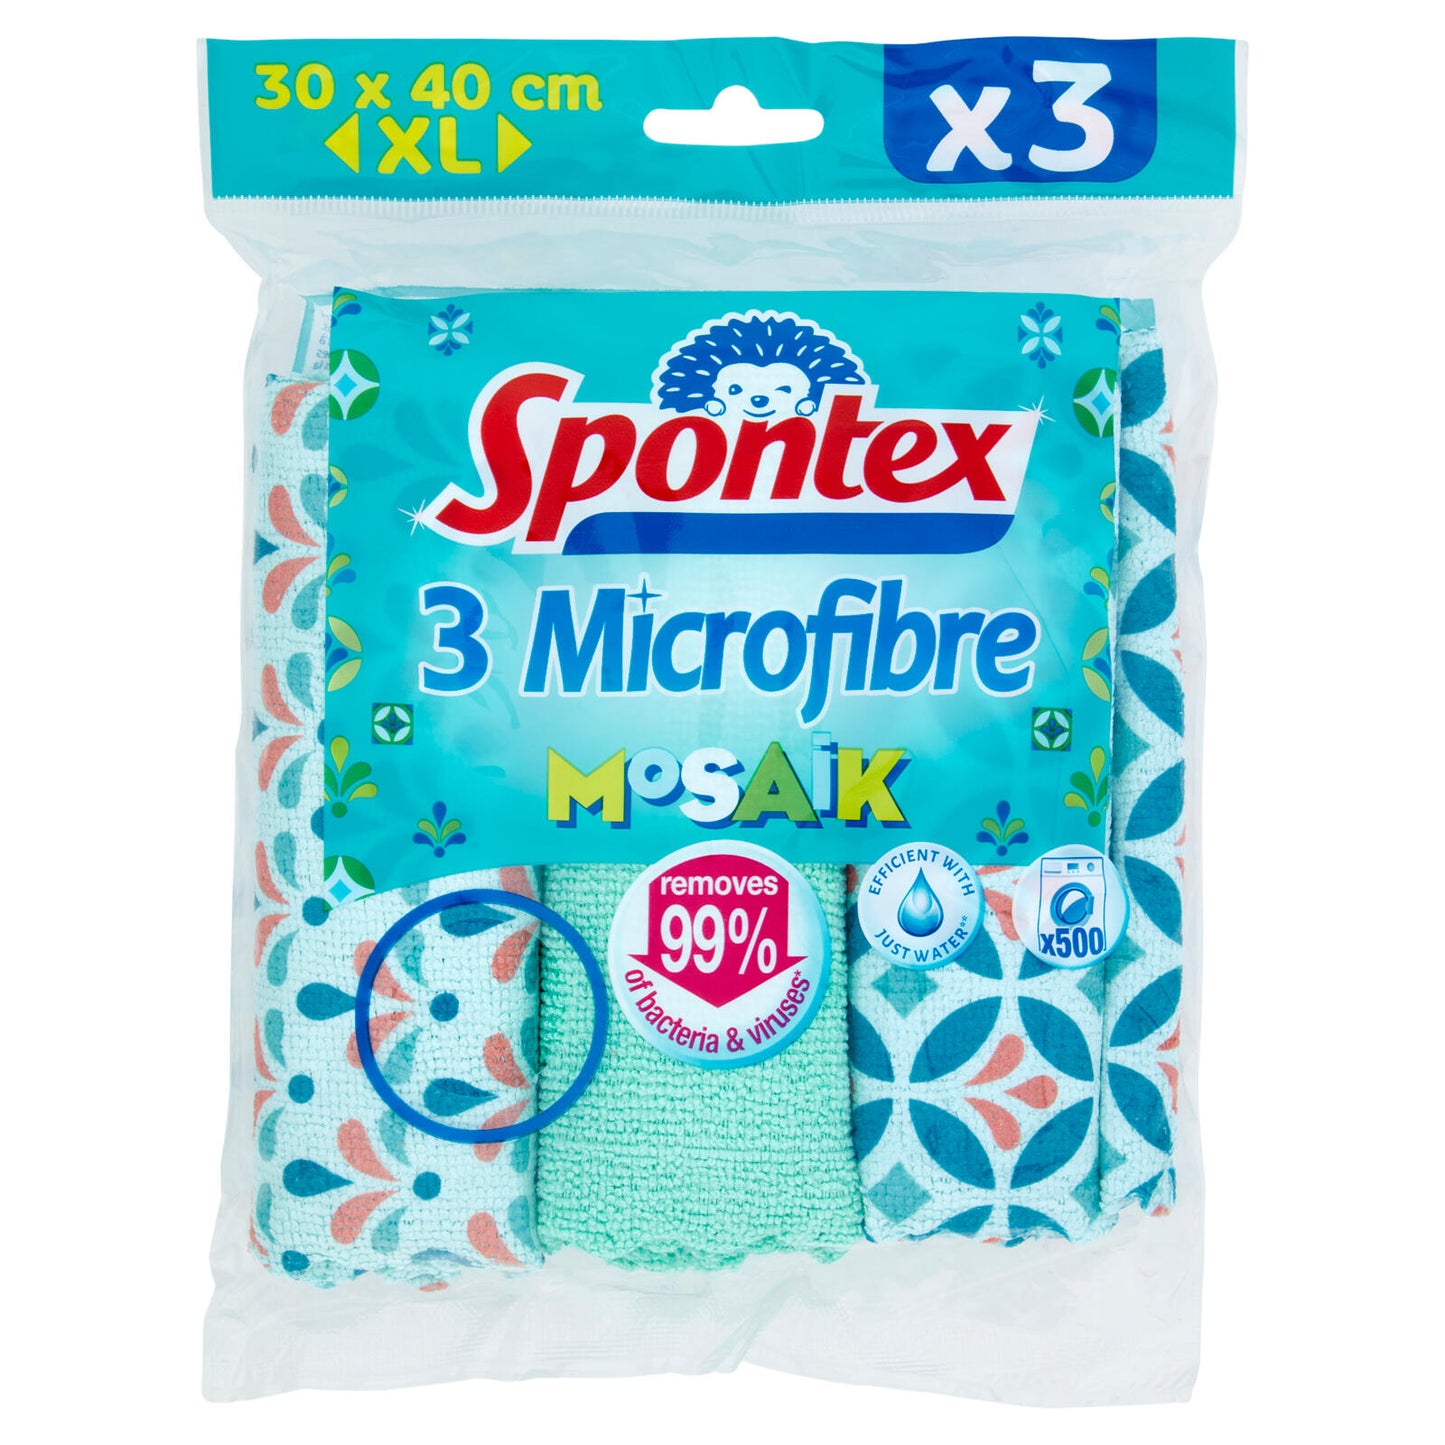 Spontex Microfibre Mosaik x3